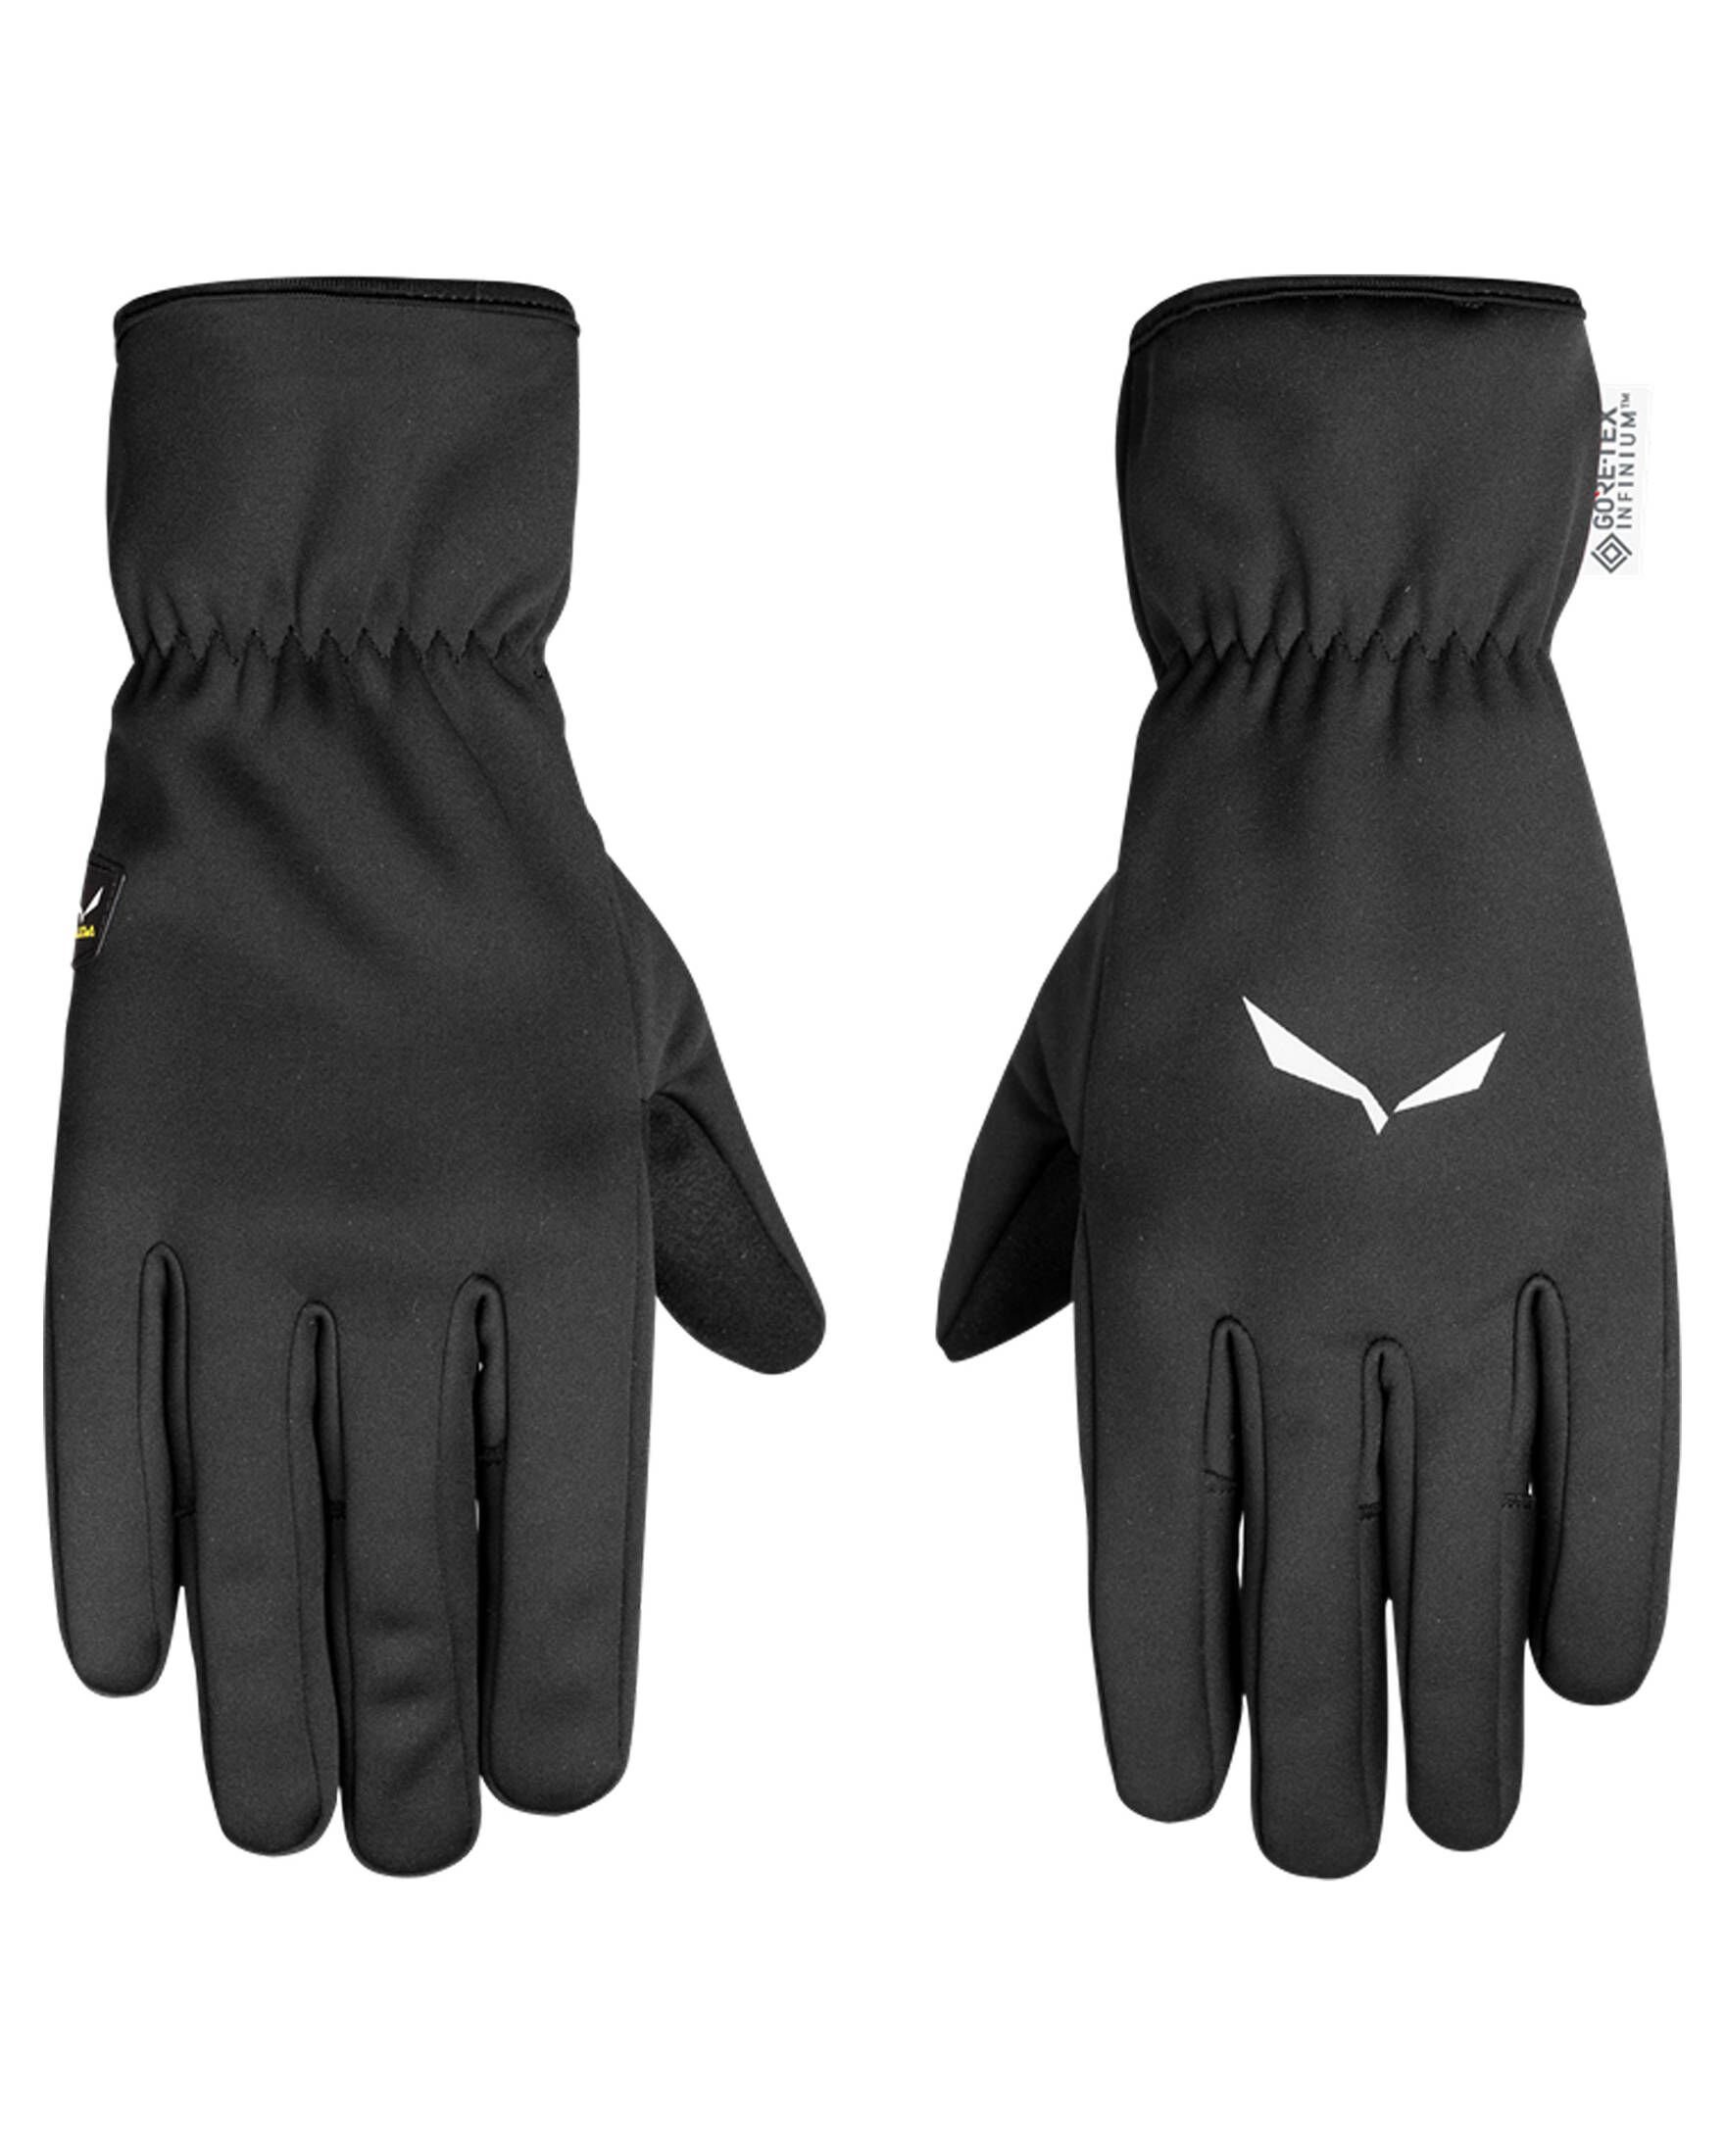 Salewa WINDSTOPPER Multisporthandschuhe GORE Handschuhe